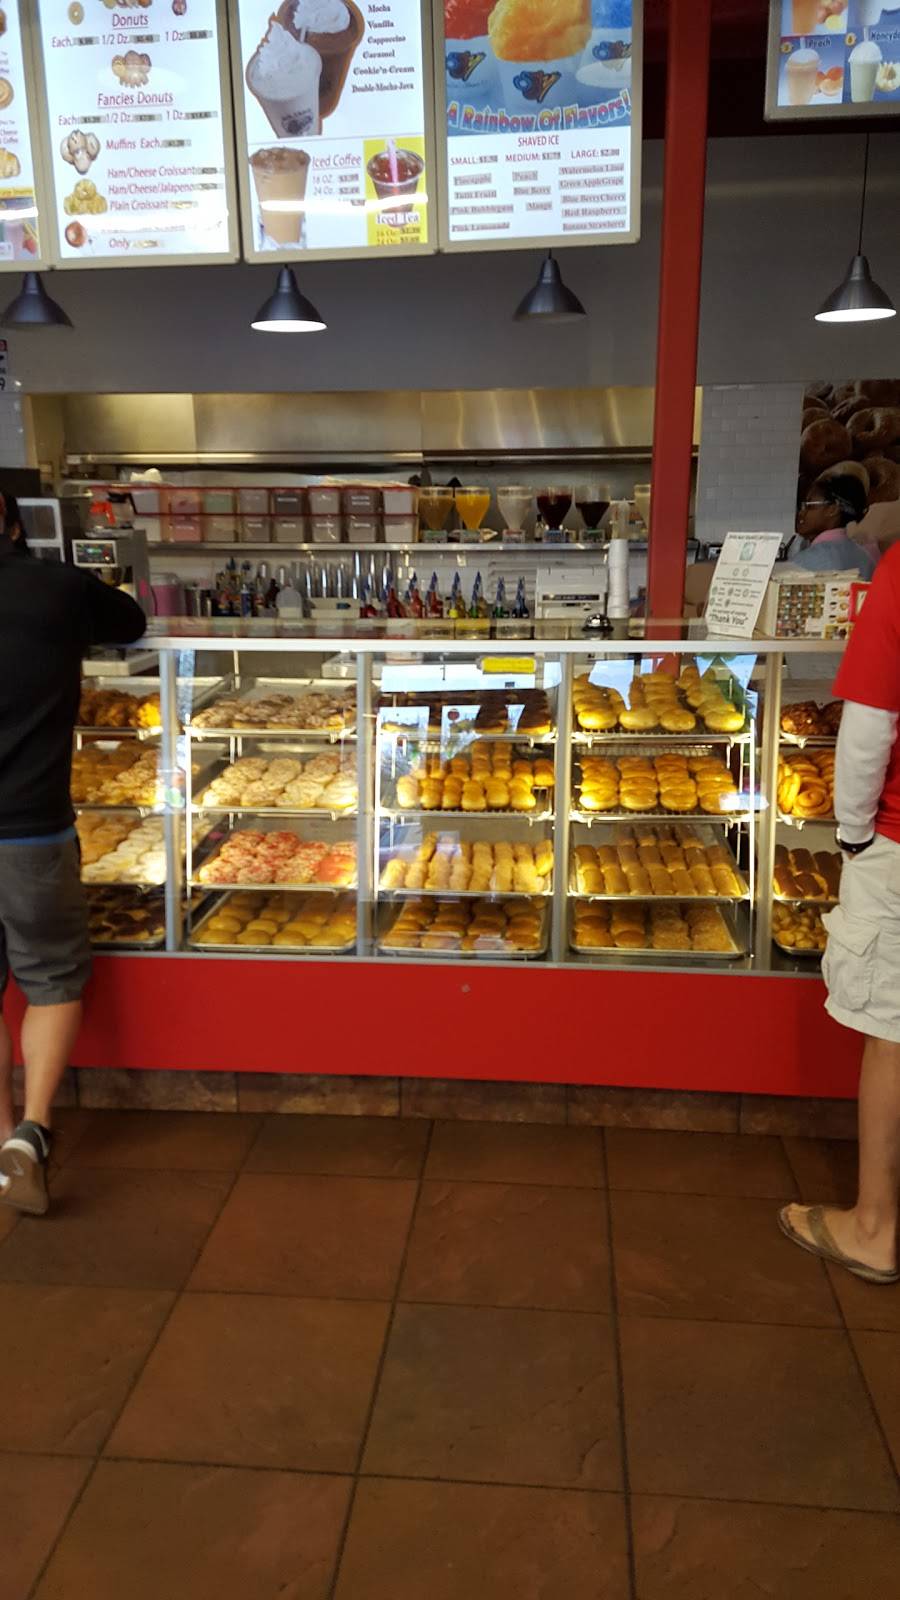 Bosa Donuts | 4015 S Arizona Ave #1, Chandler, AZ 85248, USA | Phone: (480) 895-8955